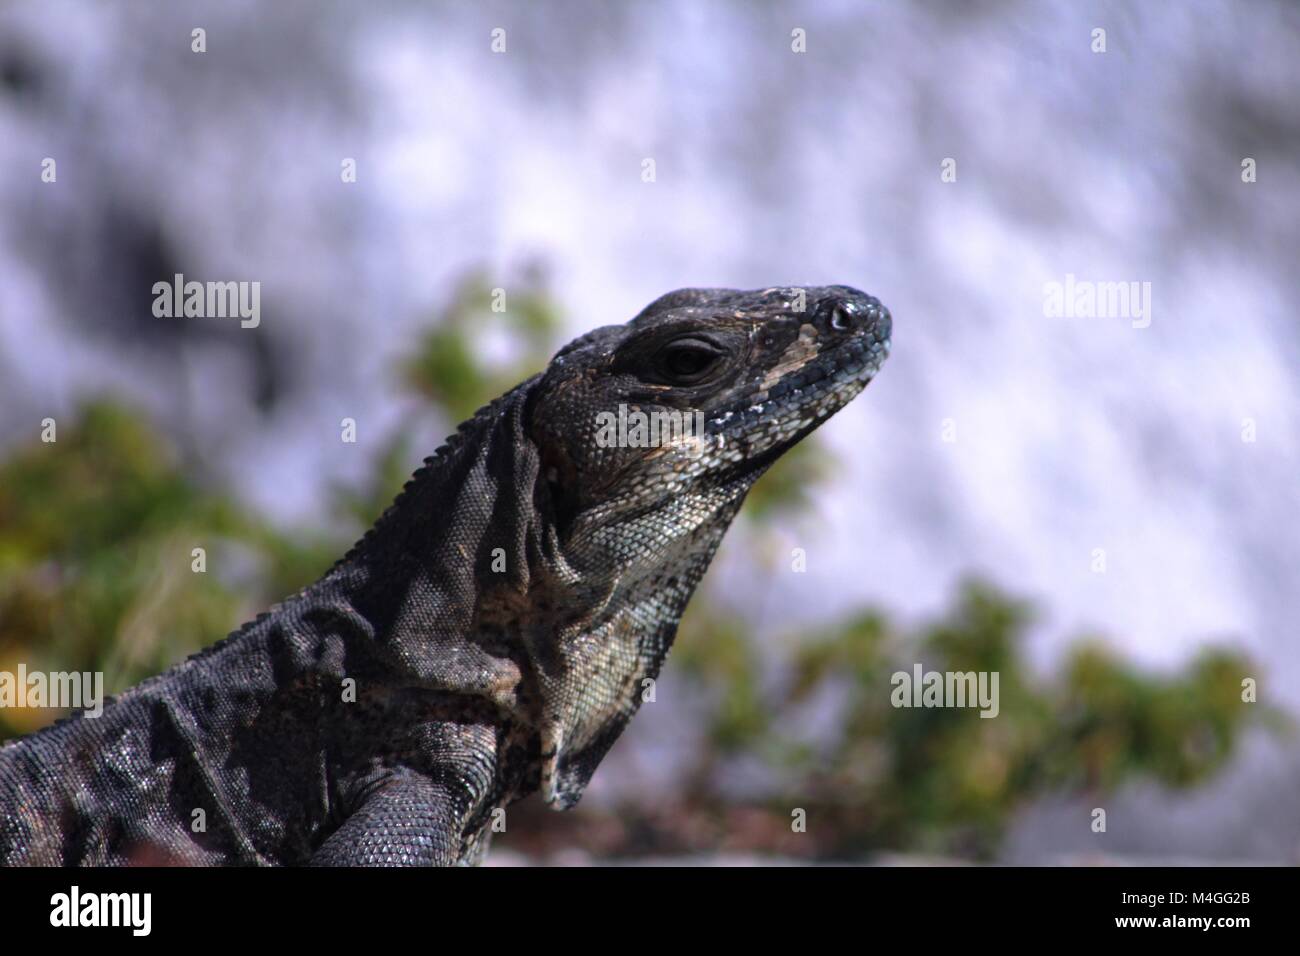 Animal reptile Iguana sunning itself Stock Photo